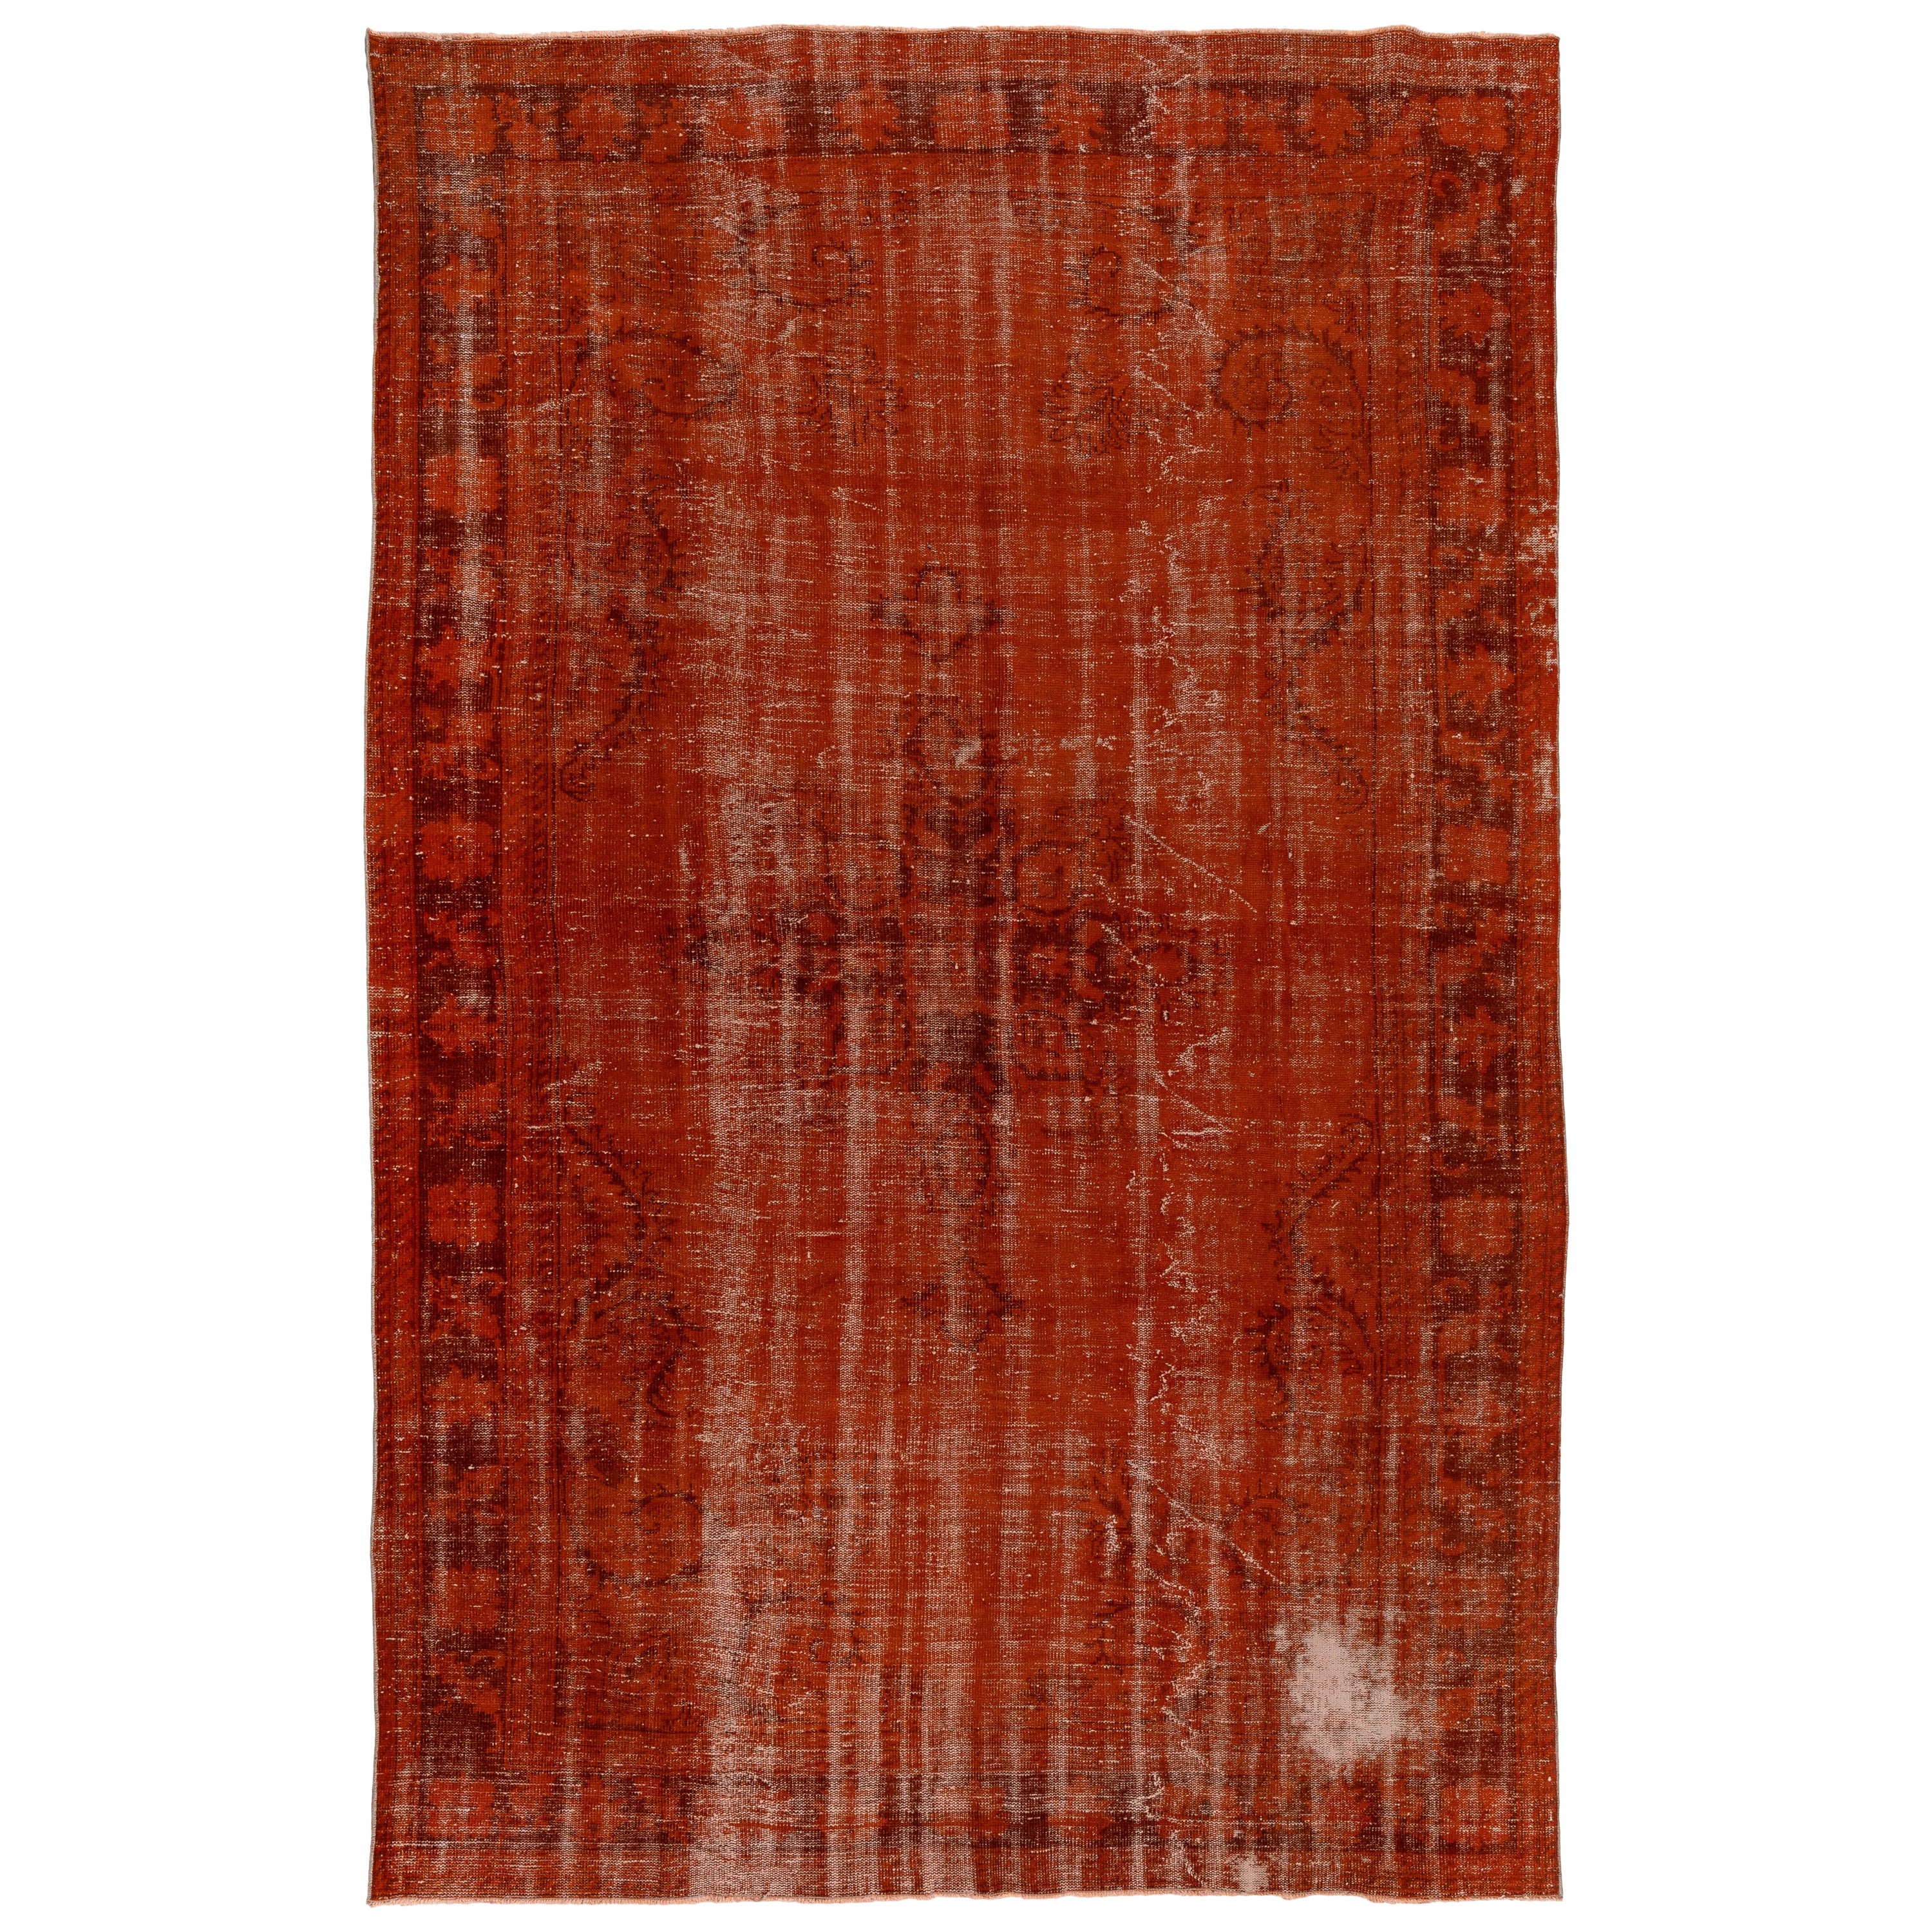 7.6x11.4 Ft Handmade Turkish Area Rug in Orange. Mid-Century Distressed Carpet For Sale